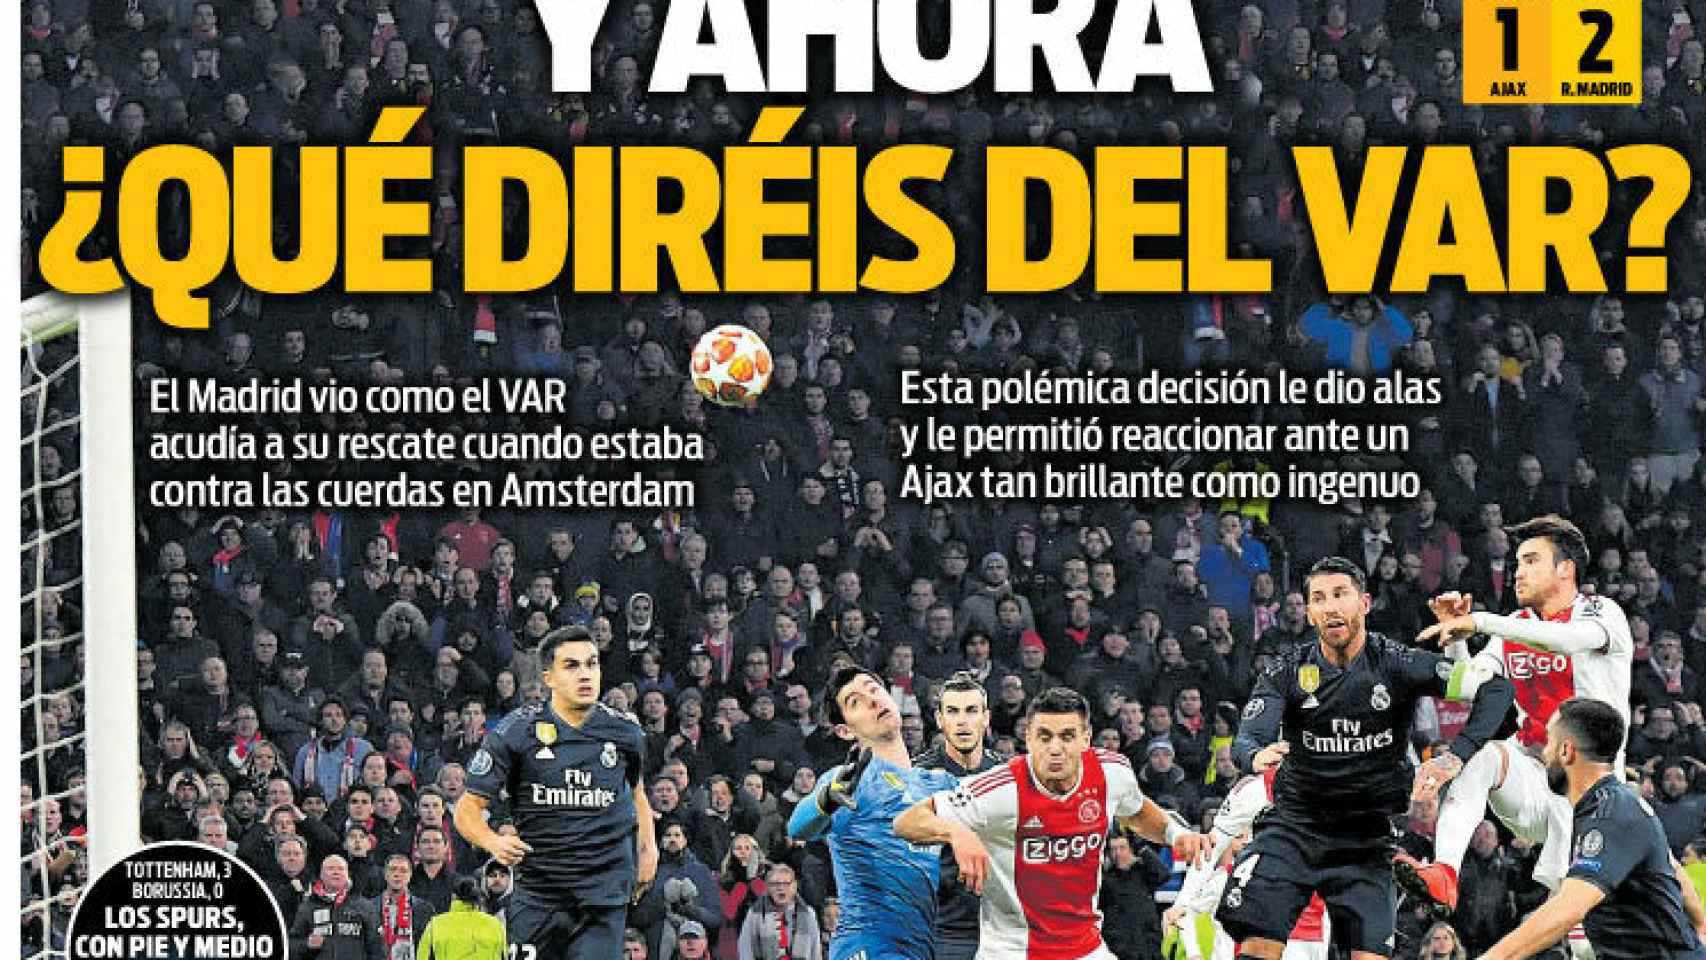 La portada del diario Sport (14/02/2019)